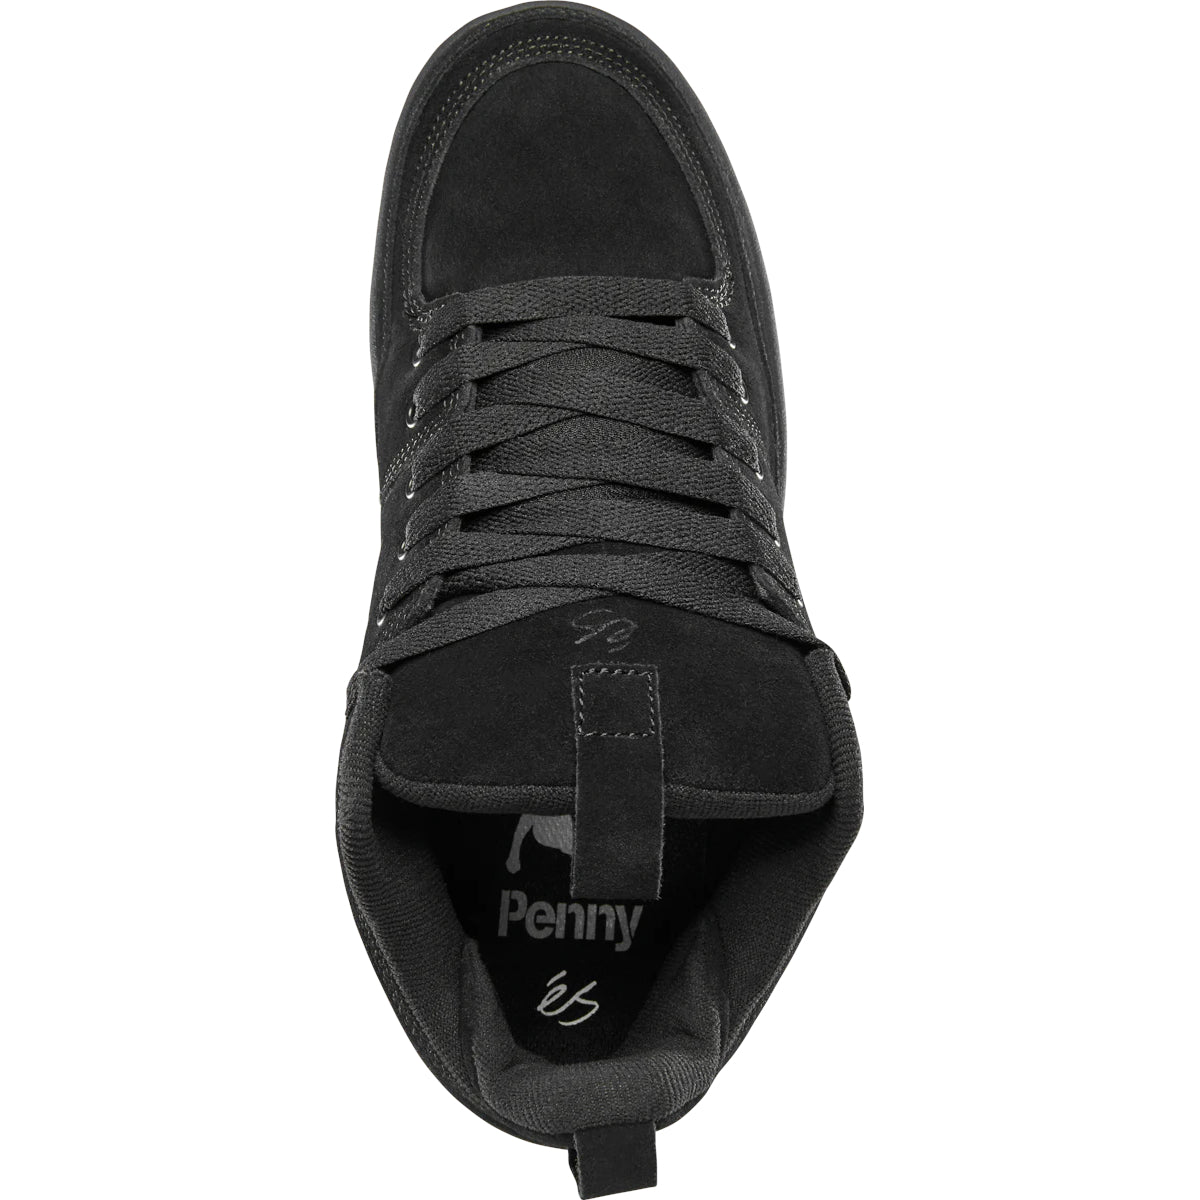 Black Penny 2 eS Skateboarding Shoe Top